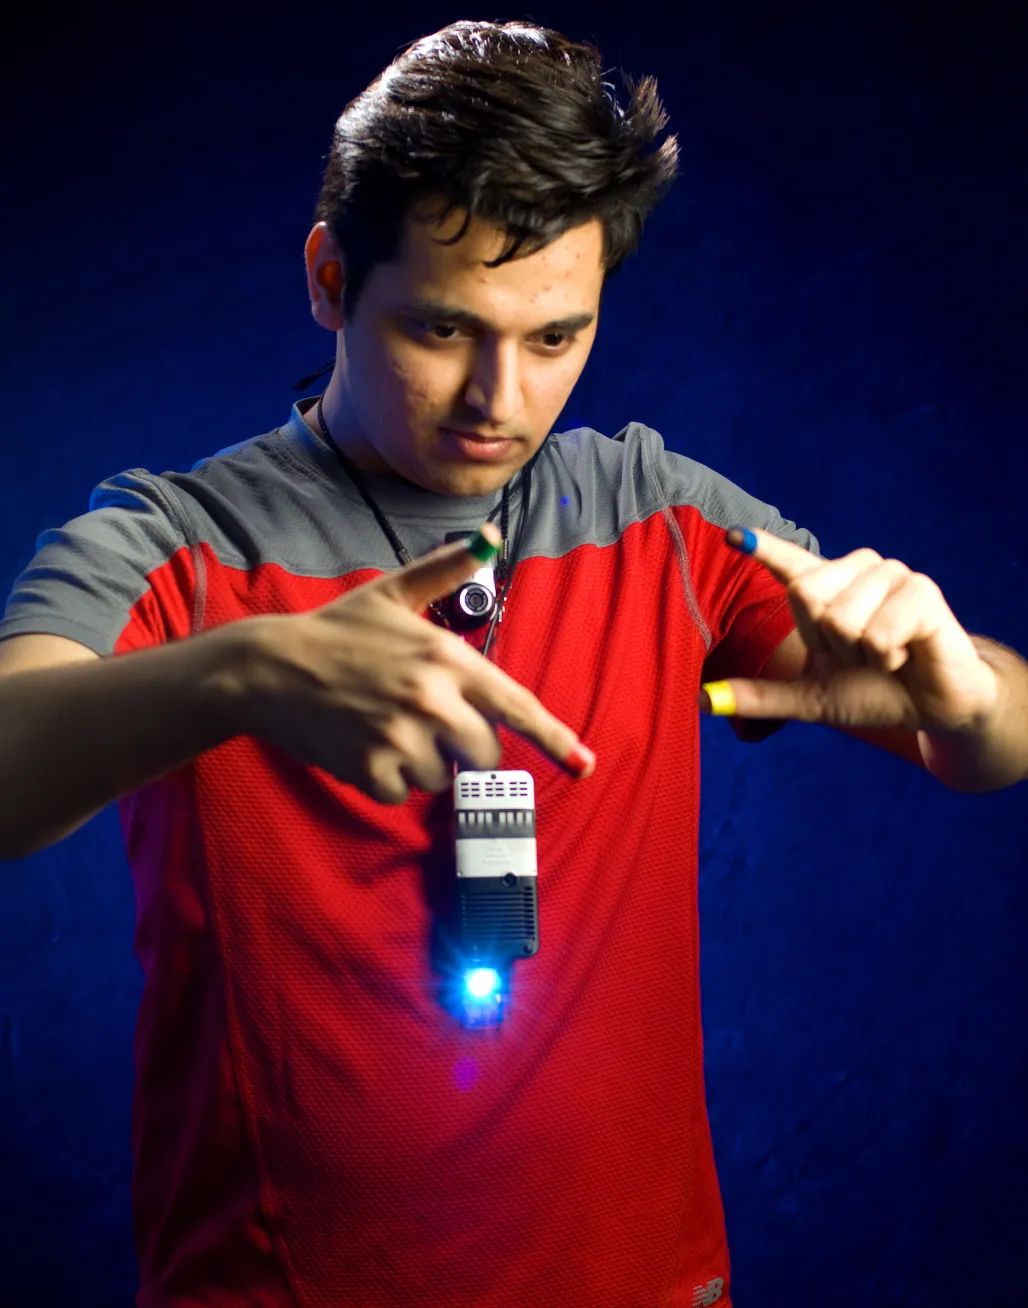 2012 年，Pranav Mistry 佩戴了一個類似的設備，他與Maes和Chang將其命名為「WUW」，為「Wear yoUr World」